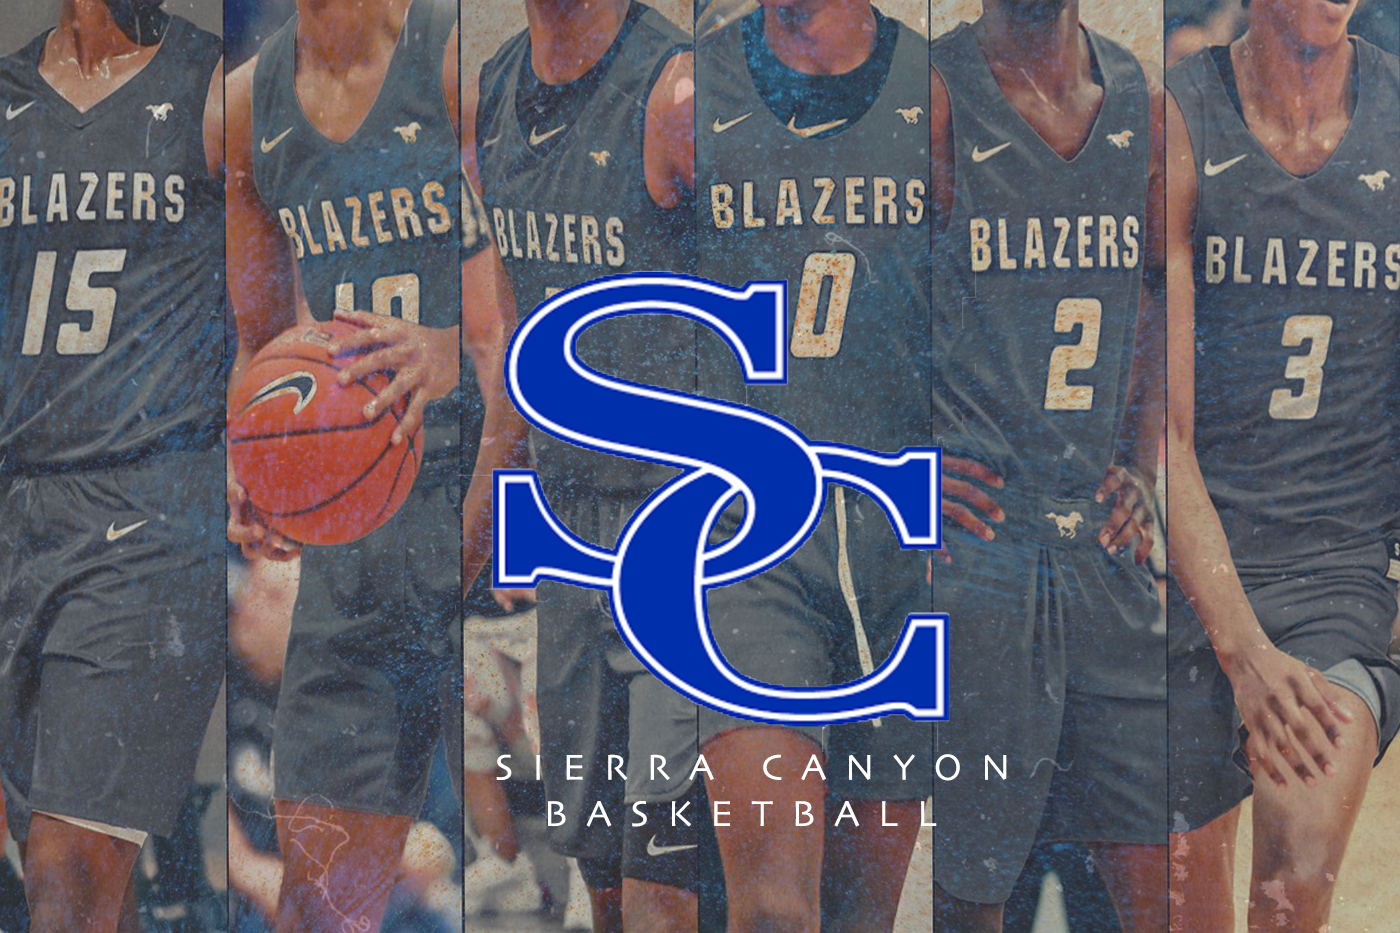 Sierra Canyon Basketball Jusballout Media